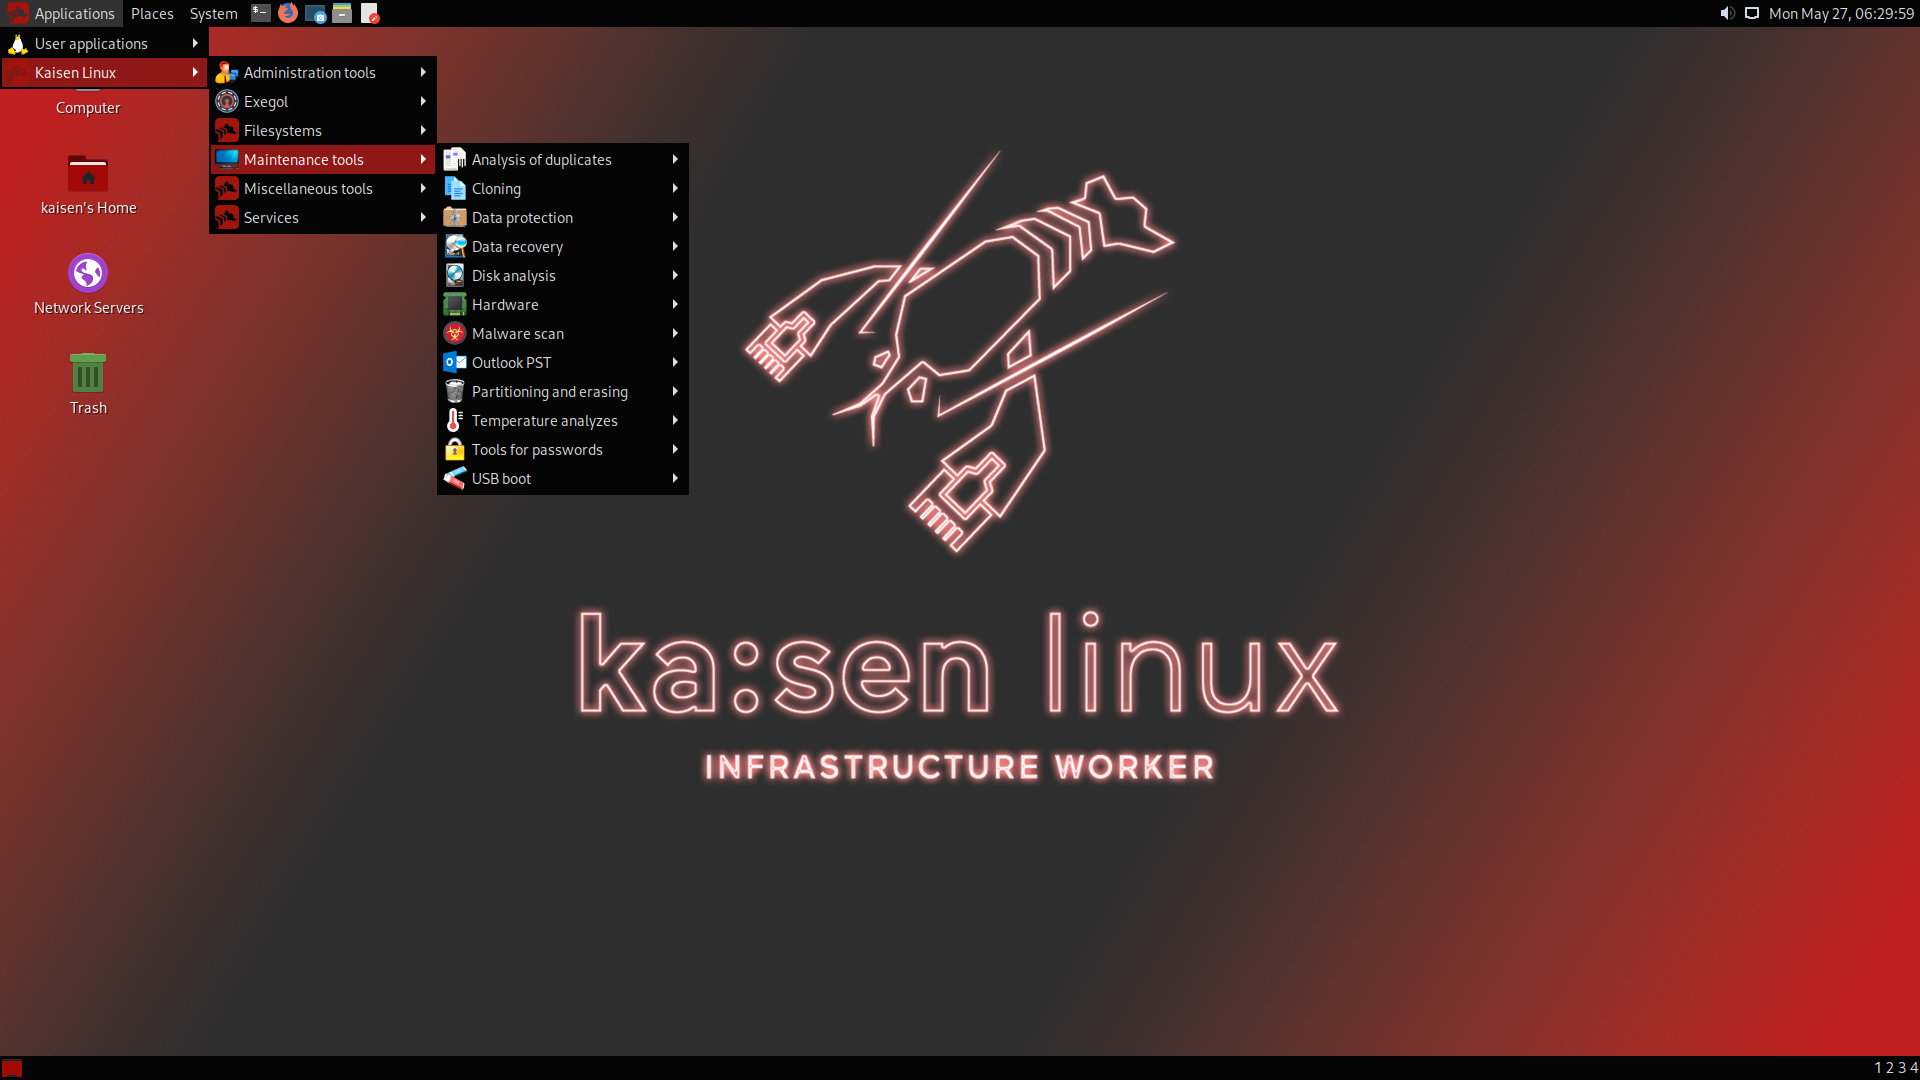 kaisen linux mate with technicians tools menu